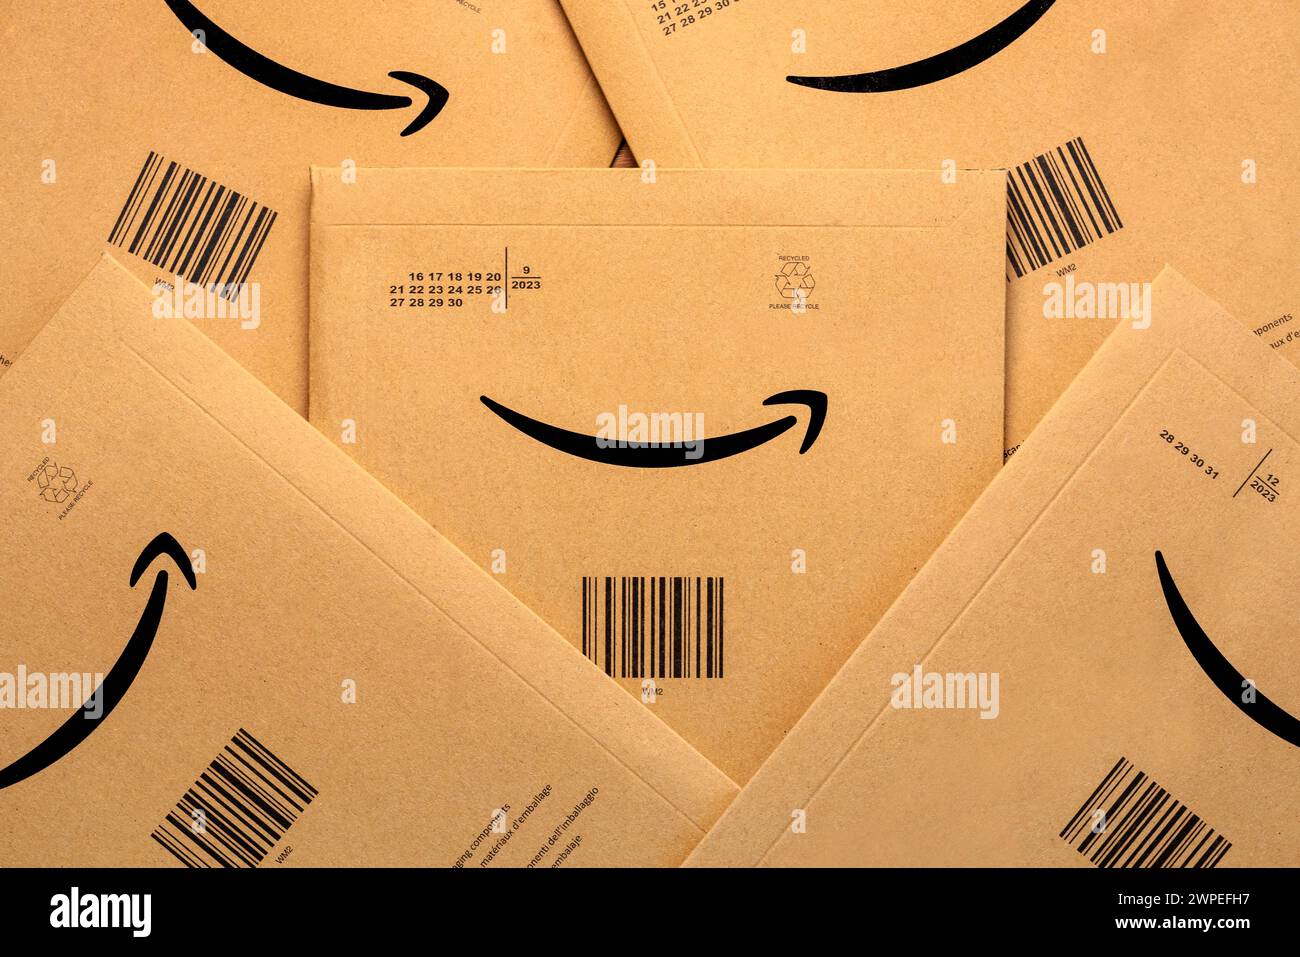 Closeup of Amazon Prime cardboard boxes and Amazon logo. Amazon prime parcel delivery. Illustrative editorial Stock Photo